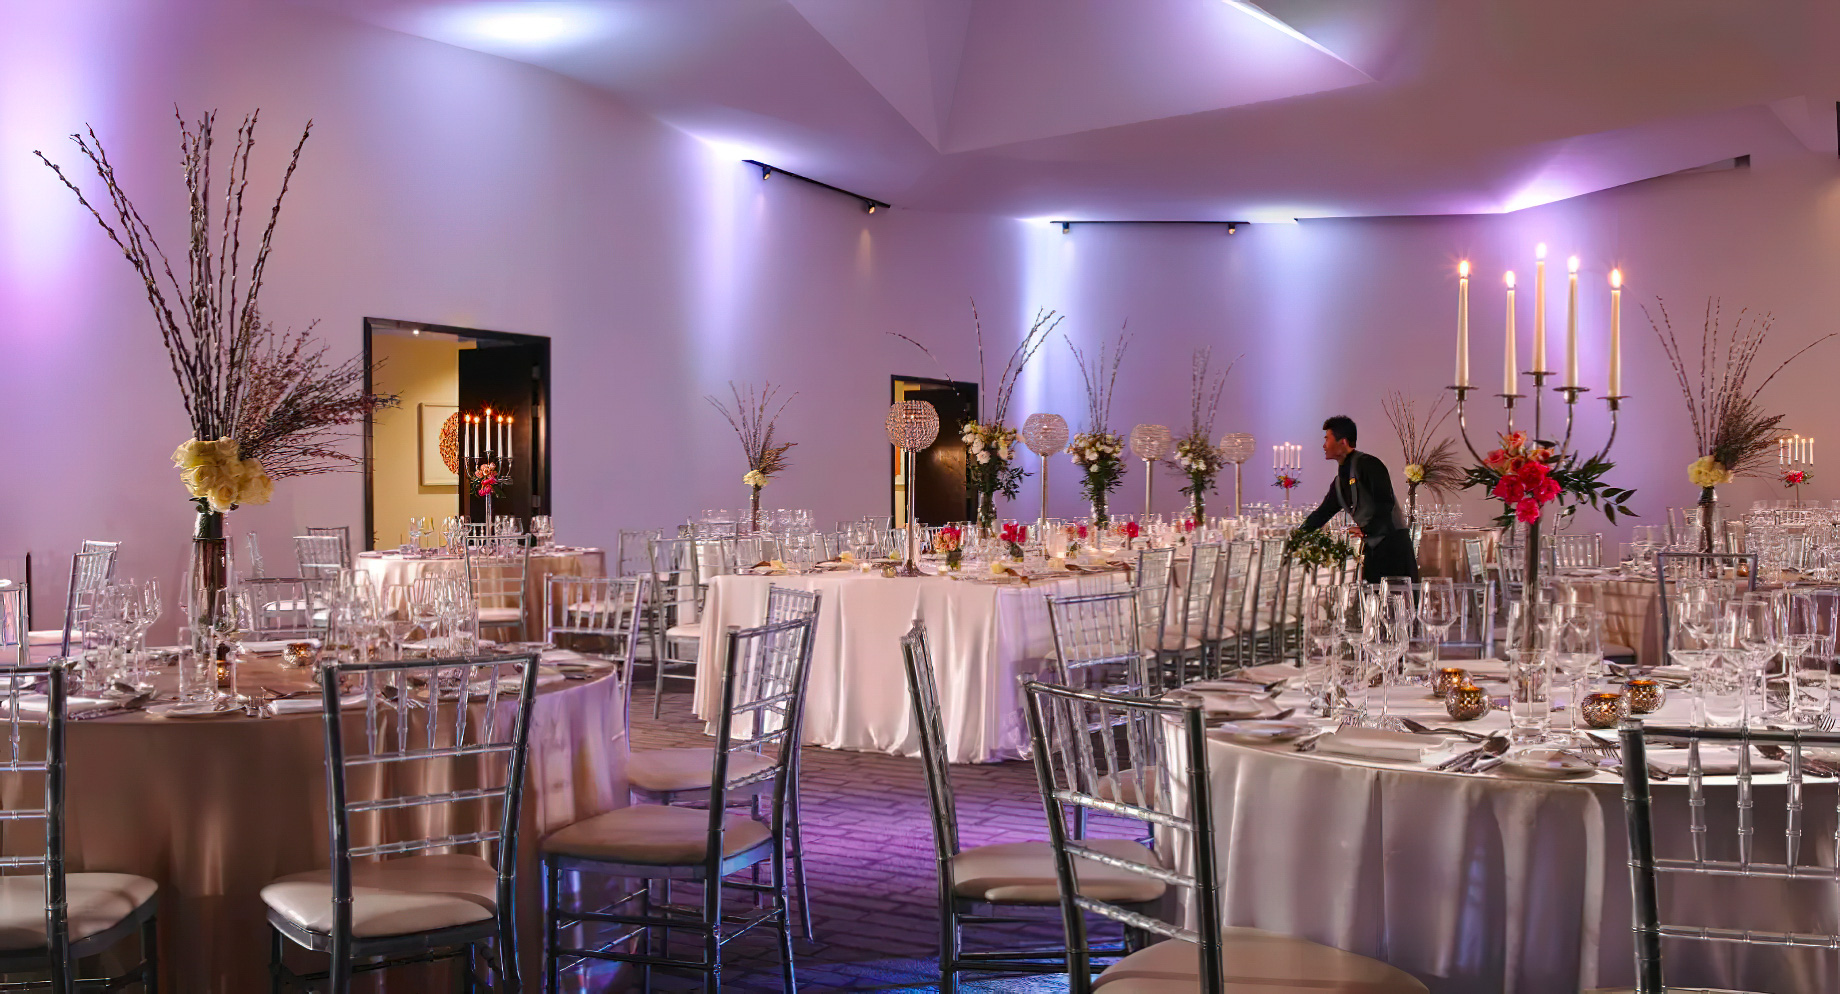 Anantara The Marker Dublin Hotel – Dublin, Ireland – Banquet Room